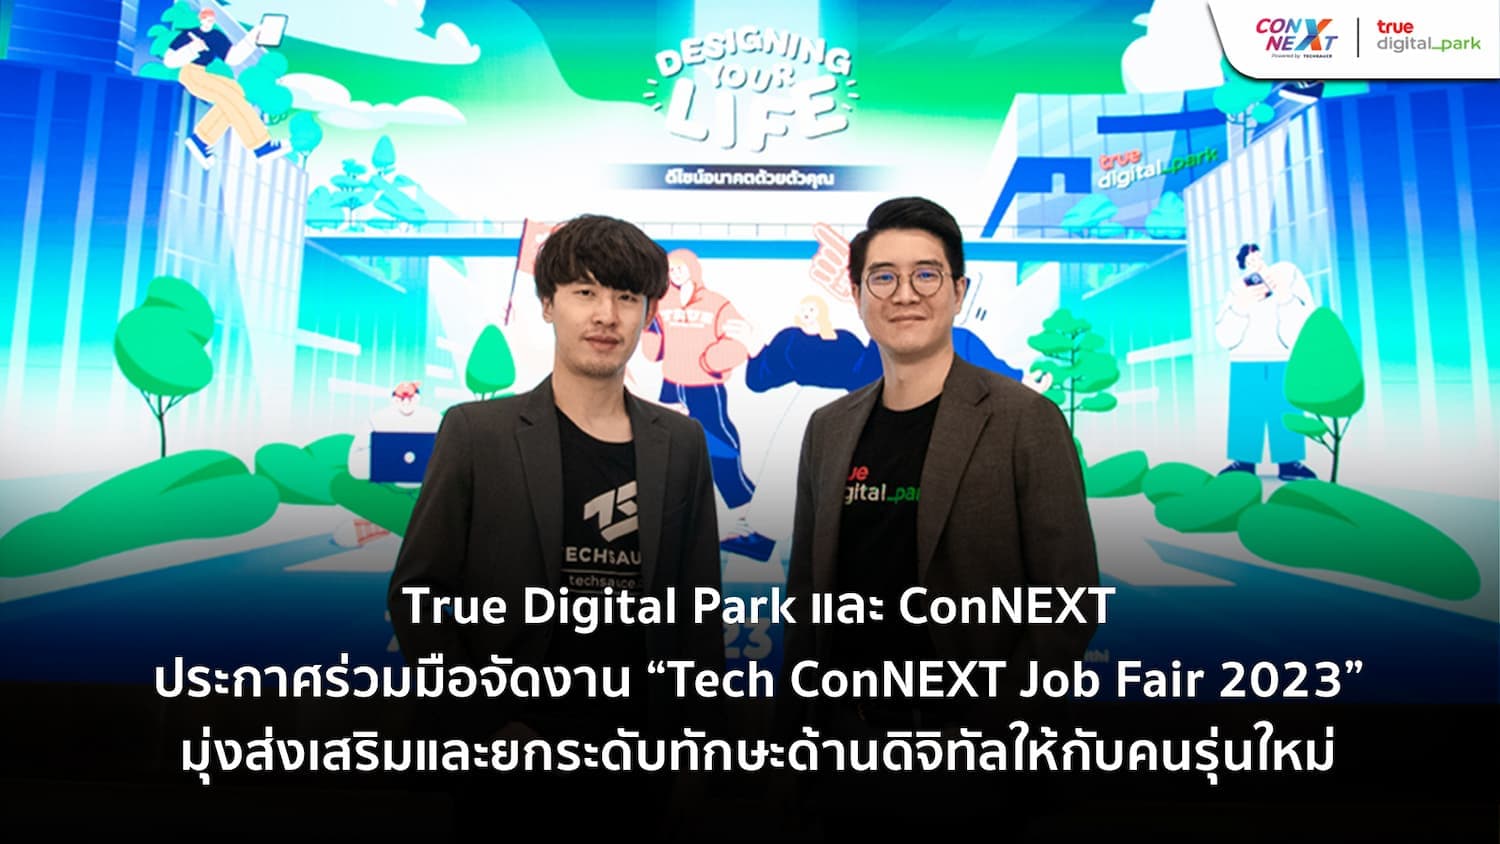 True Digital Park และ ConNEXT ประกาศร่วมมือจัดงาน “Tech ConNEXT Job Fair 2023”